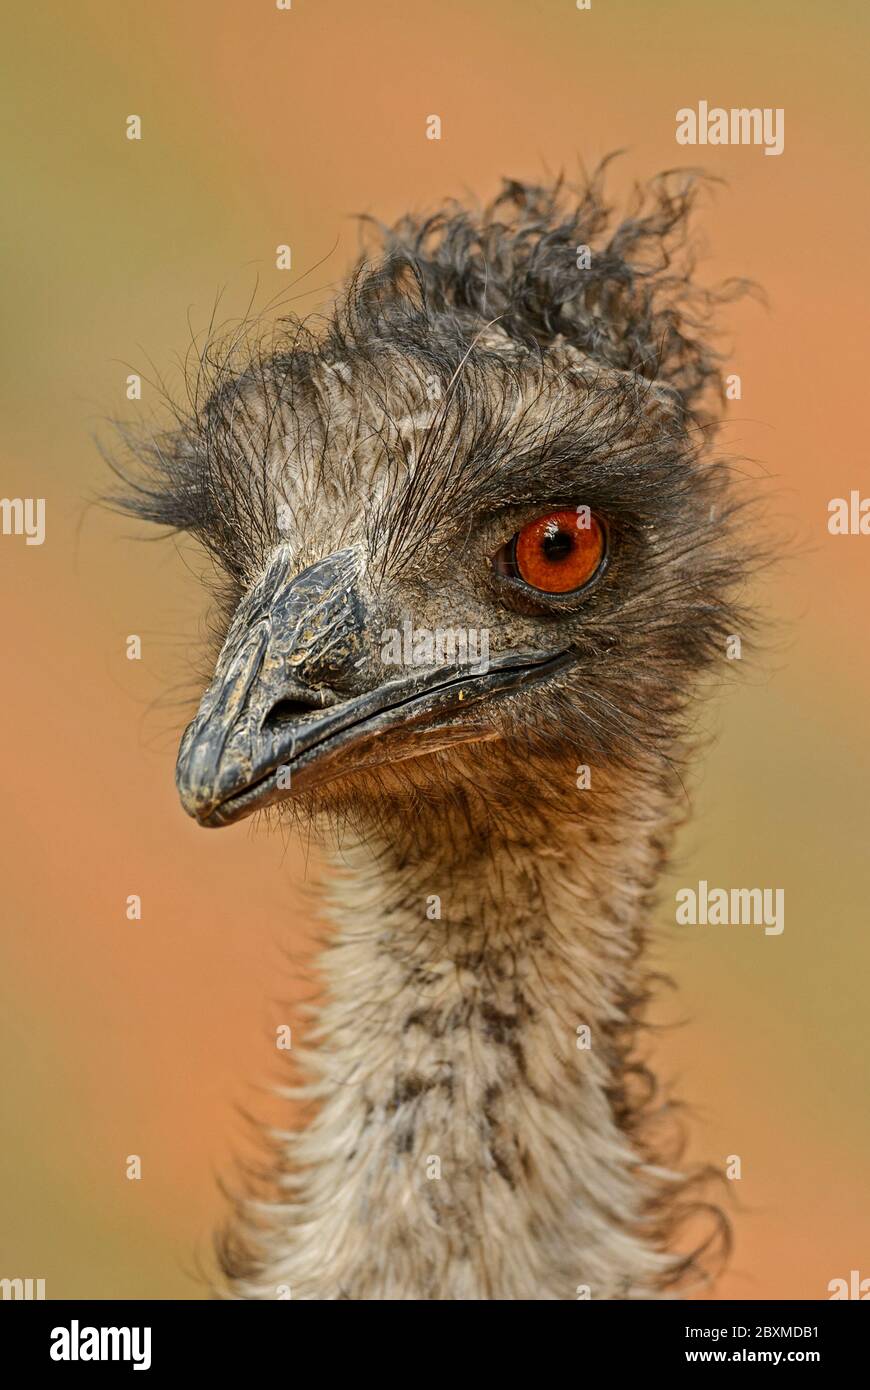 Common Emu - Dromaius novaehollandiae, portrait of large ground popular bird from Australian savannas and bushes, Australia. Stock Photo